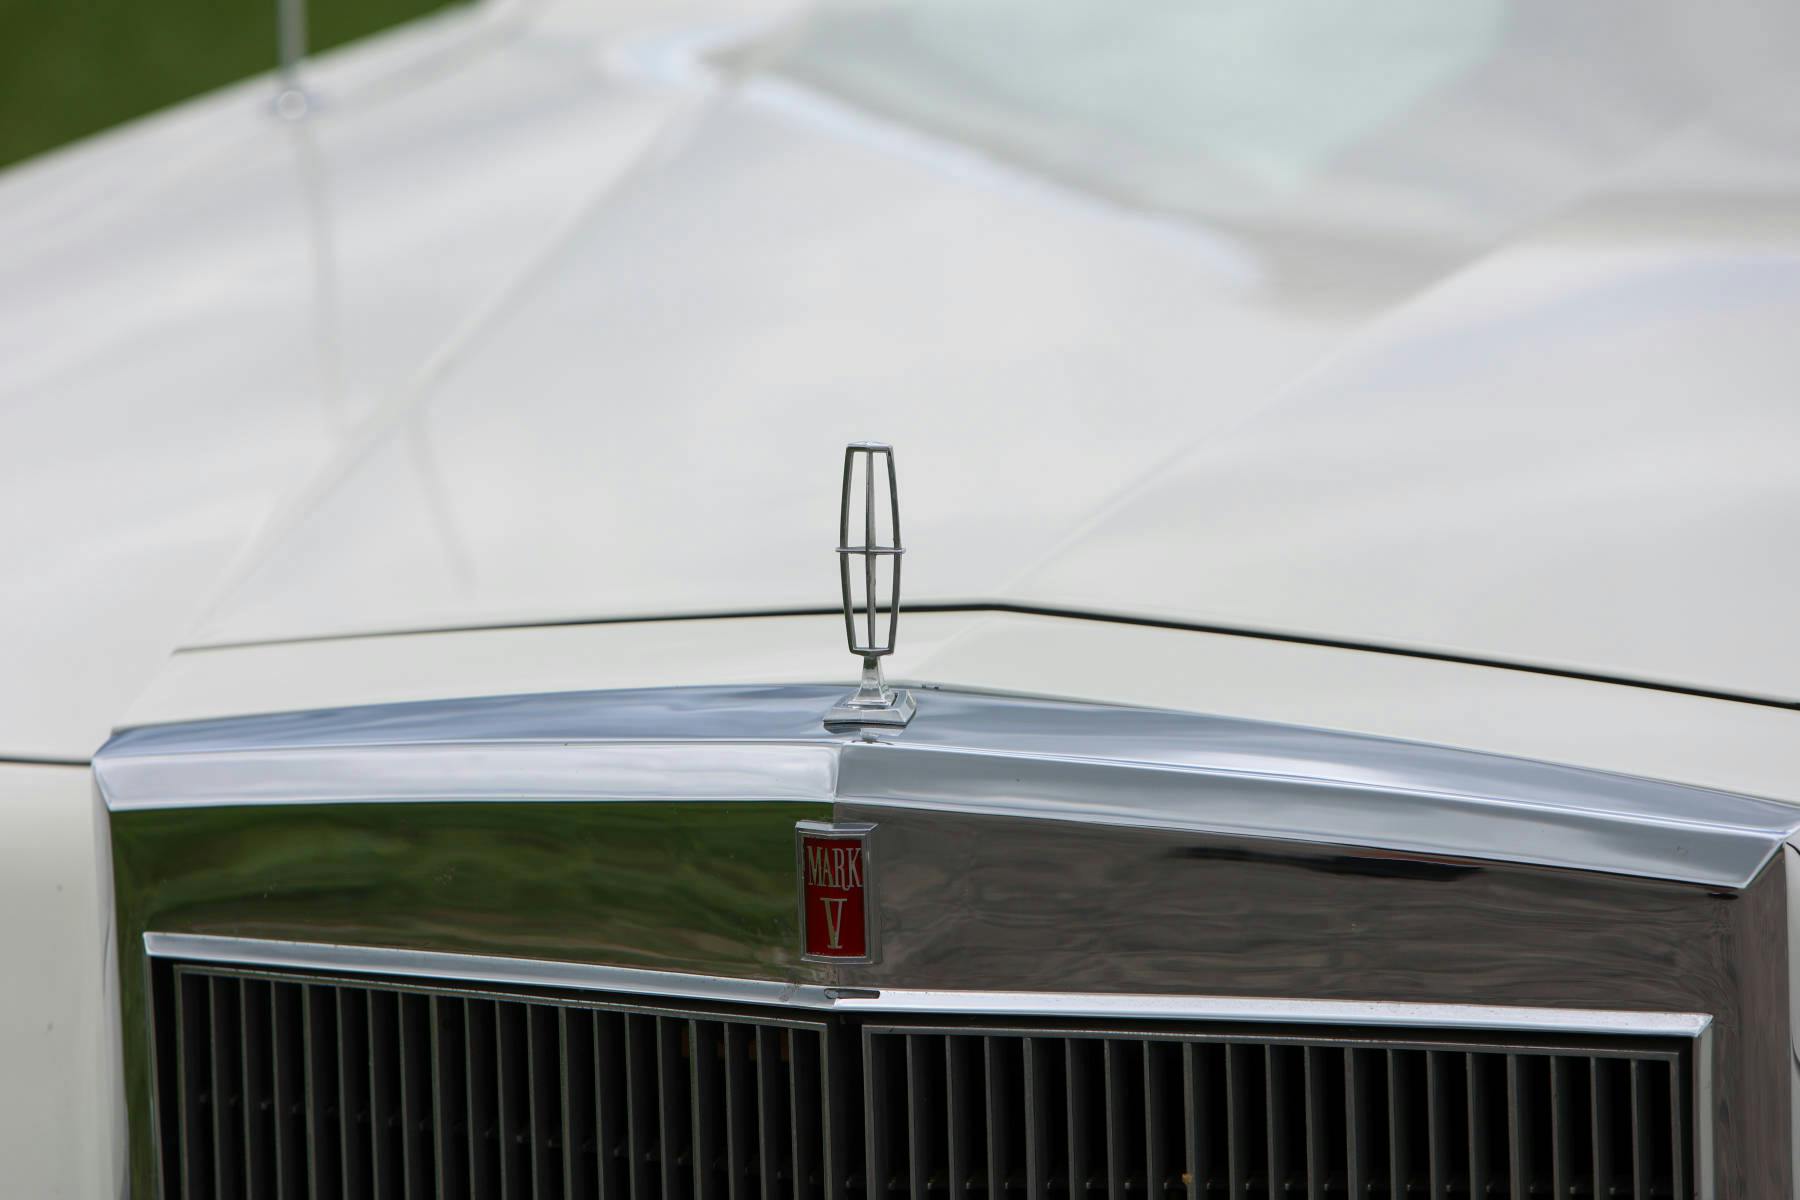 1979-Lincoln-Continental-Mark-V-Bill-Blass-Edition-badge-detail